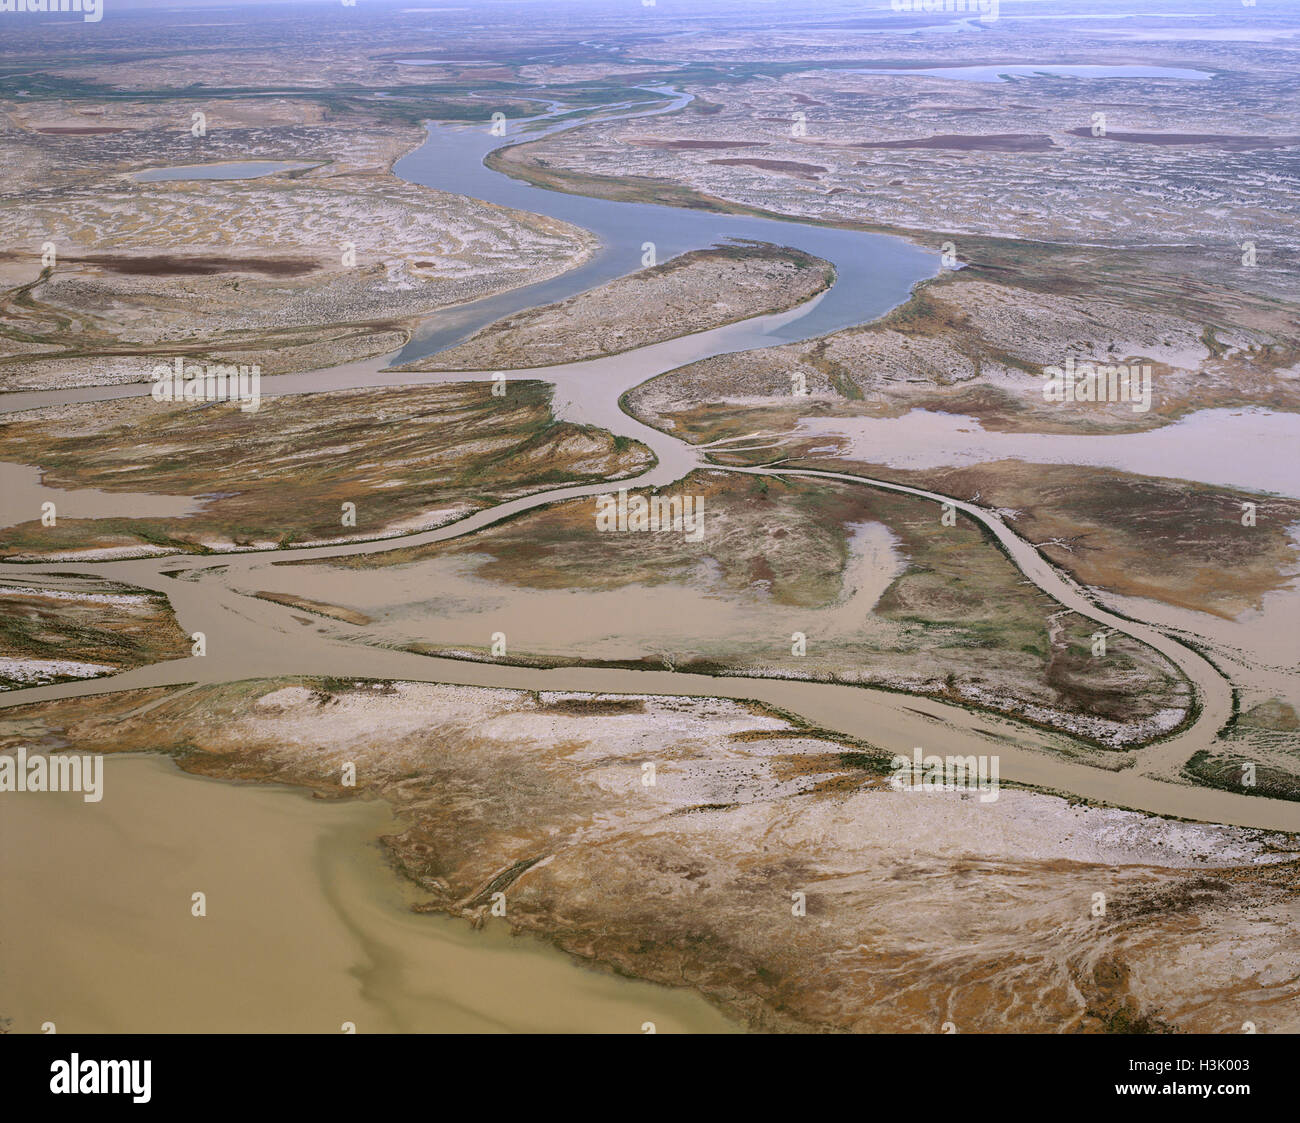 River system feeding Lake Eyre: Stock Photo